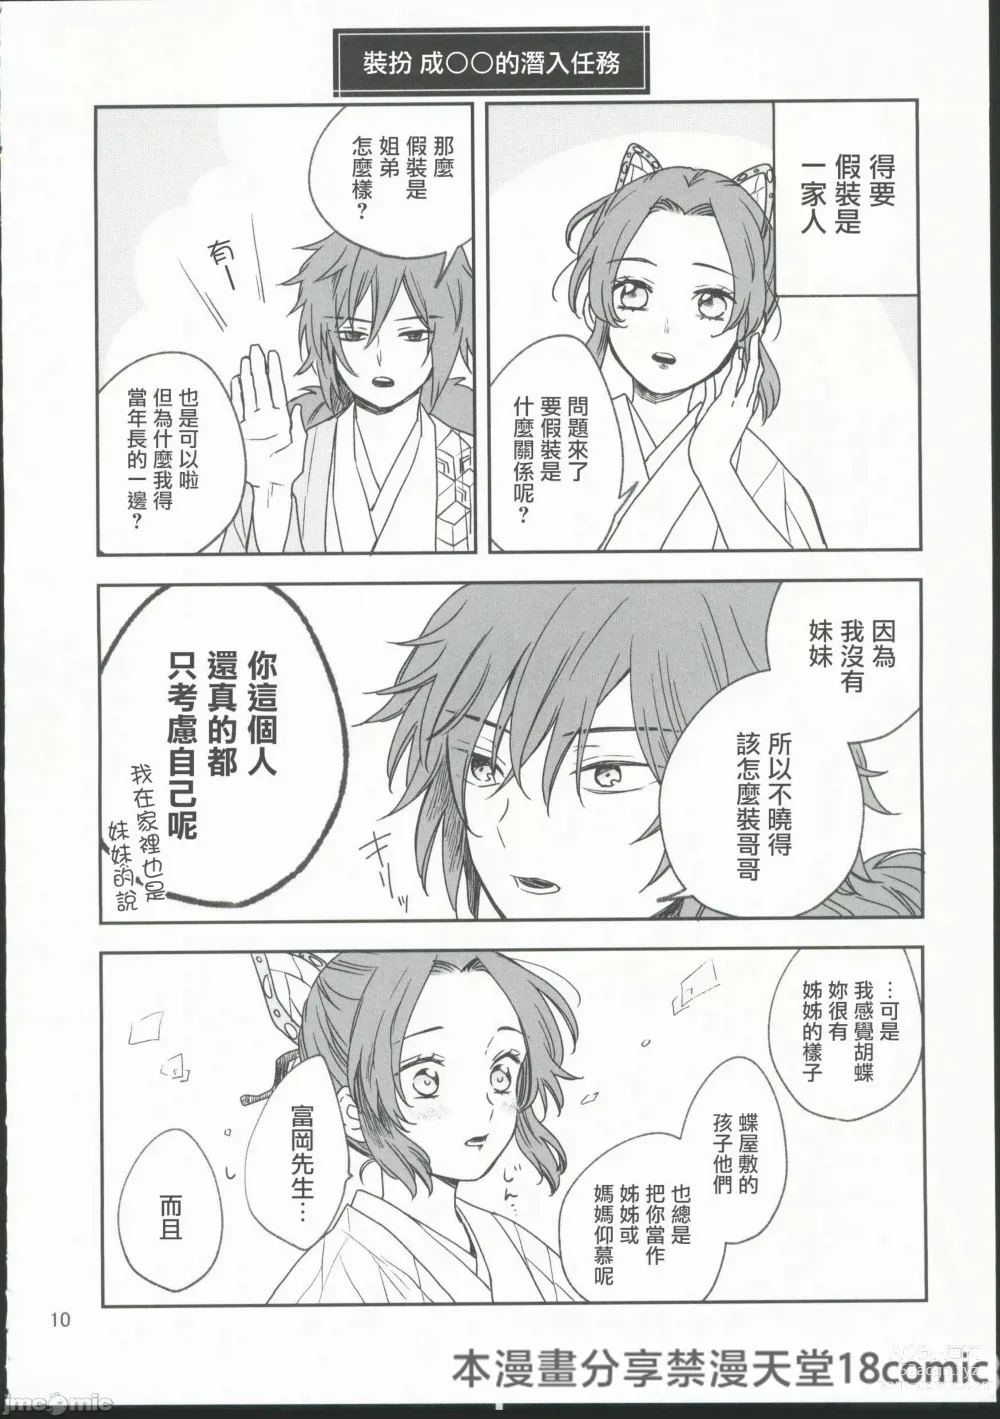 Page 9 of doujinshi Koi Tsumugi